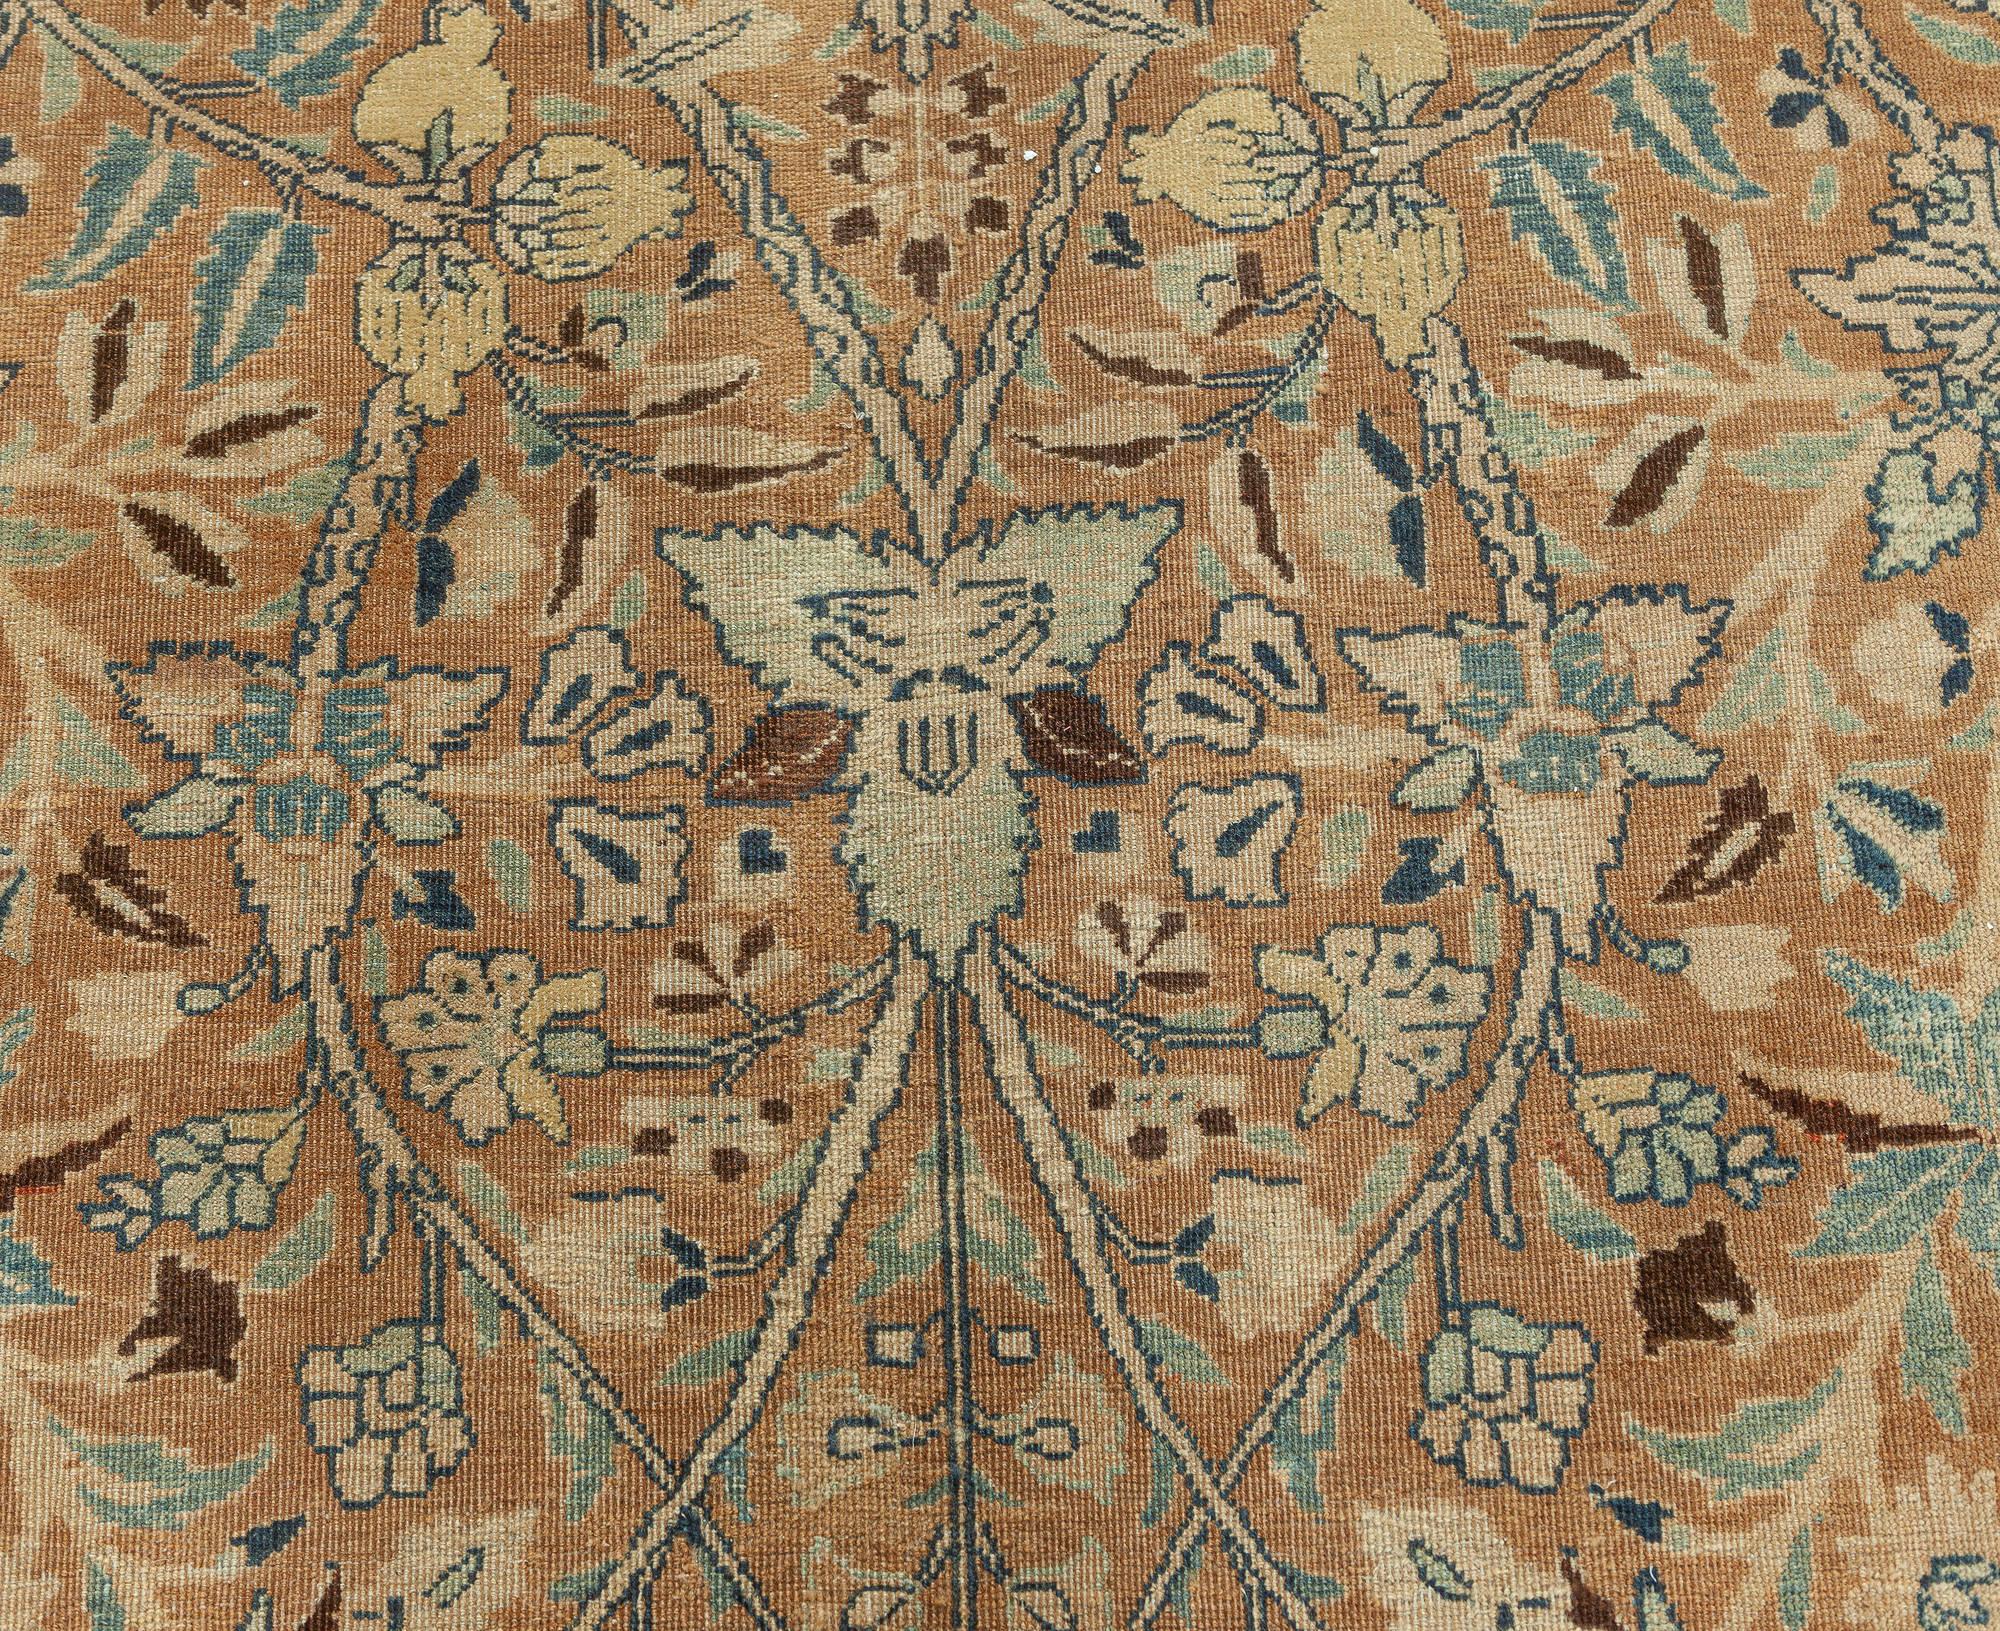 Authentic Persian Meshad handmade wool rug
Size: 11'2